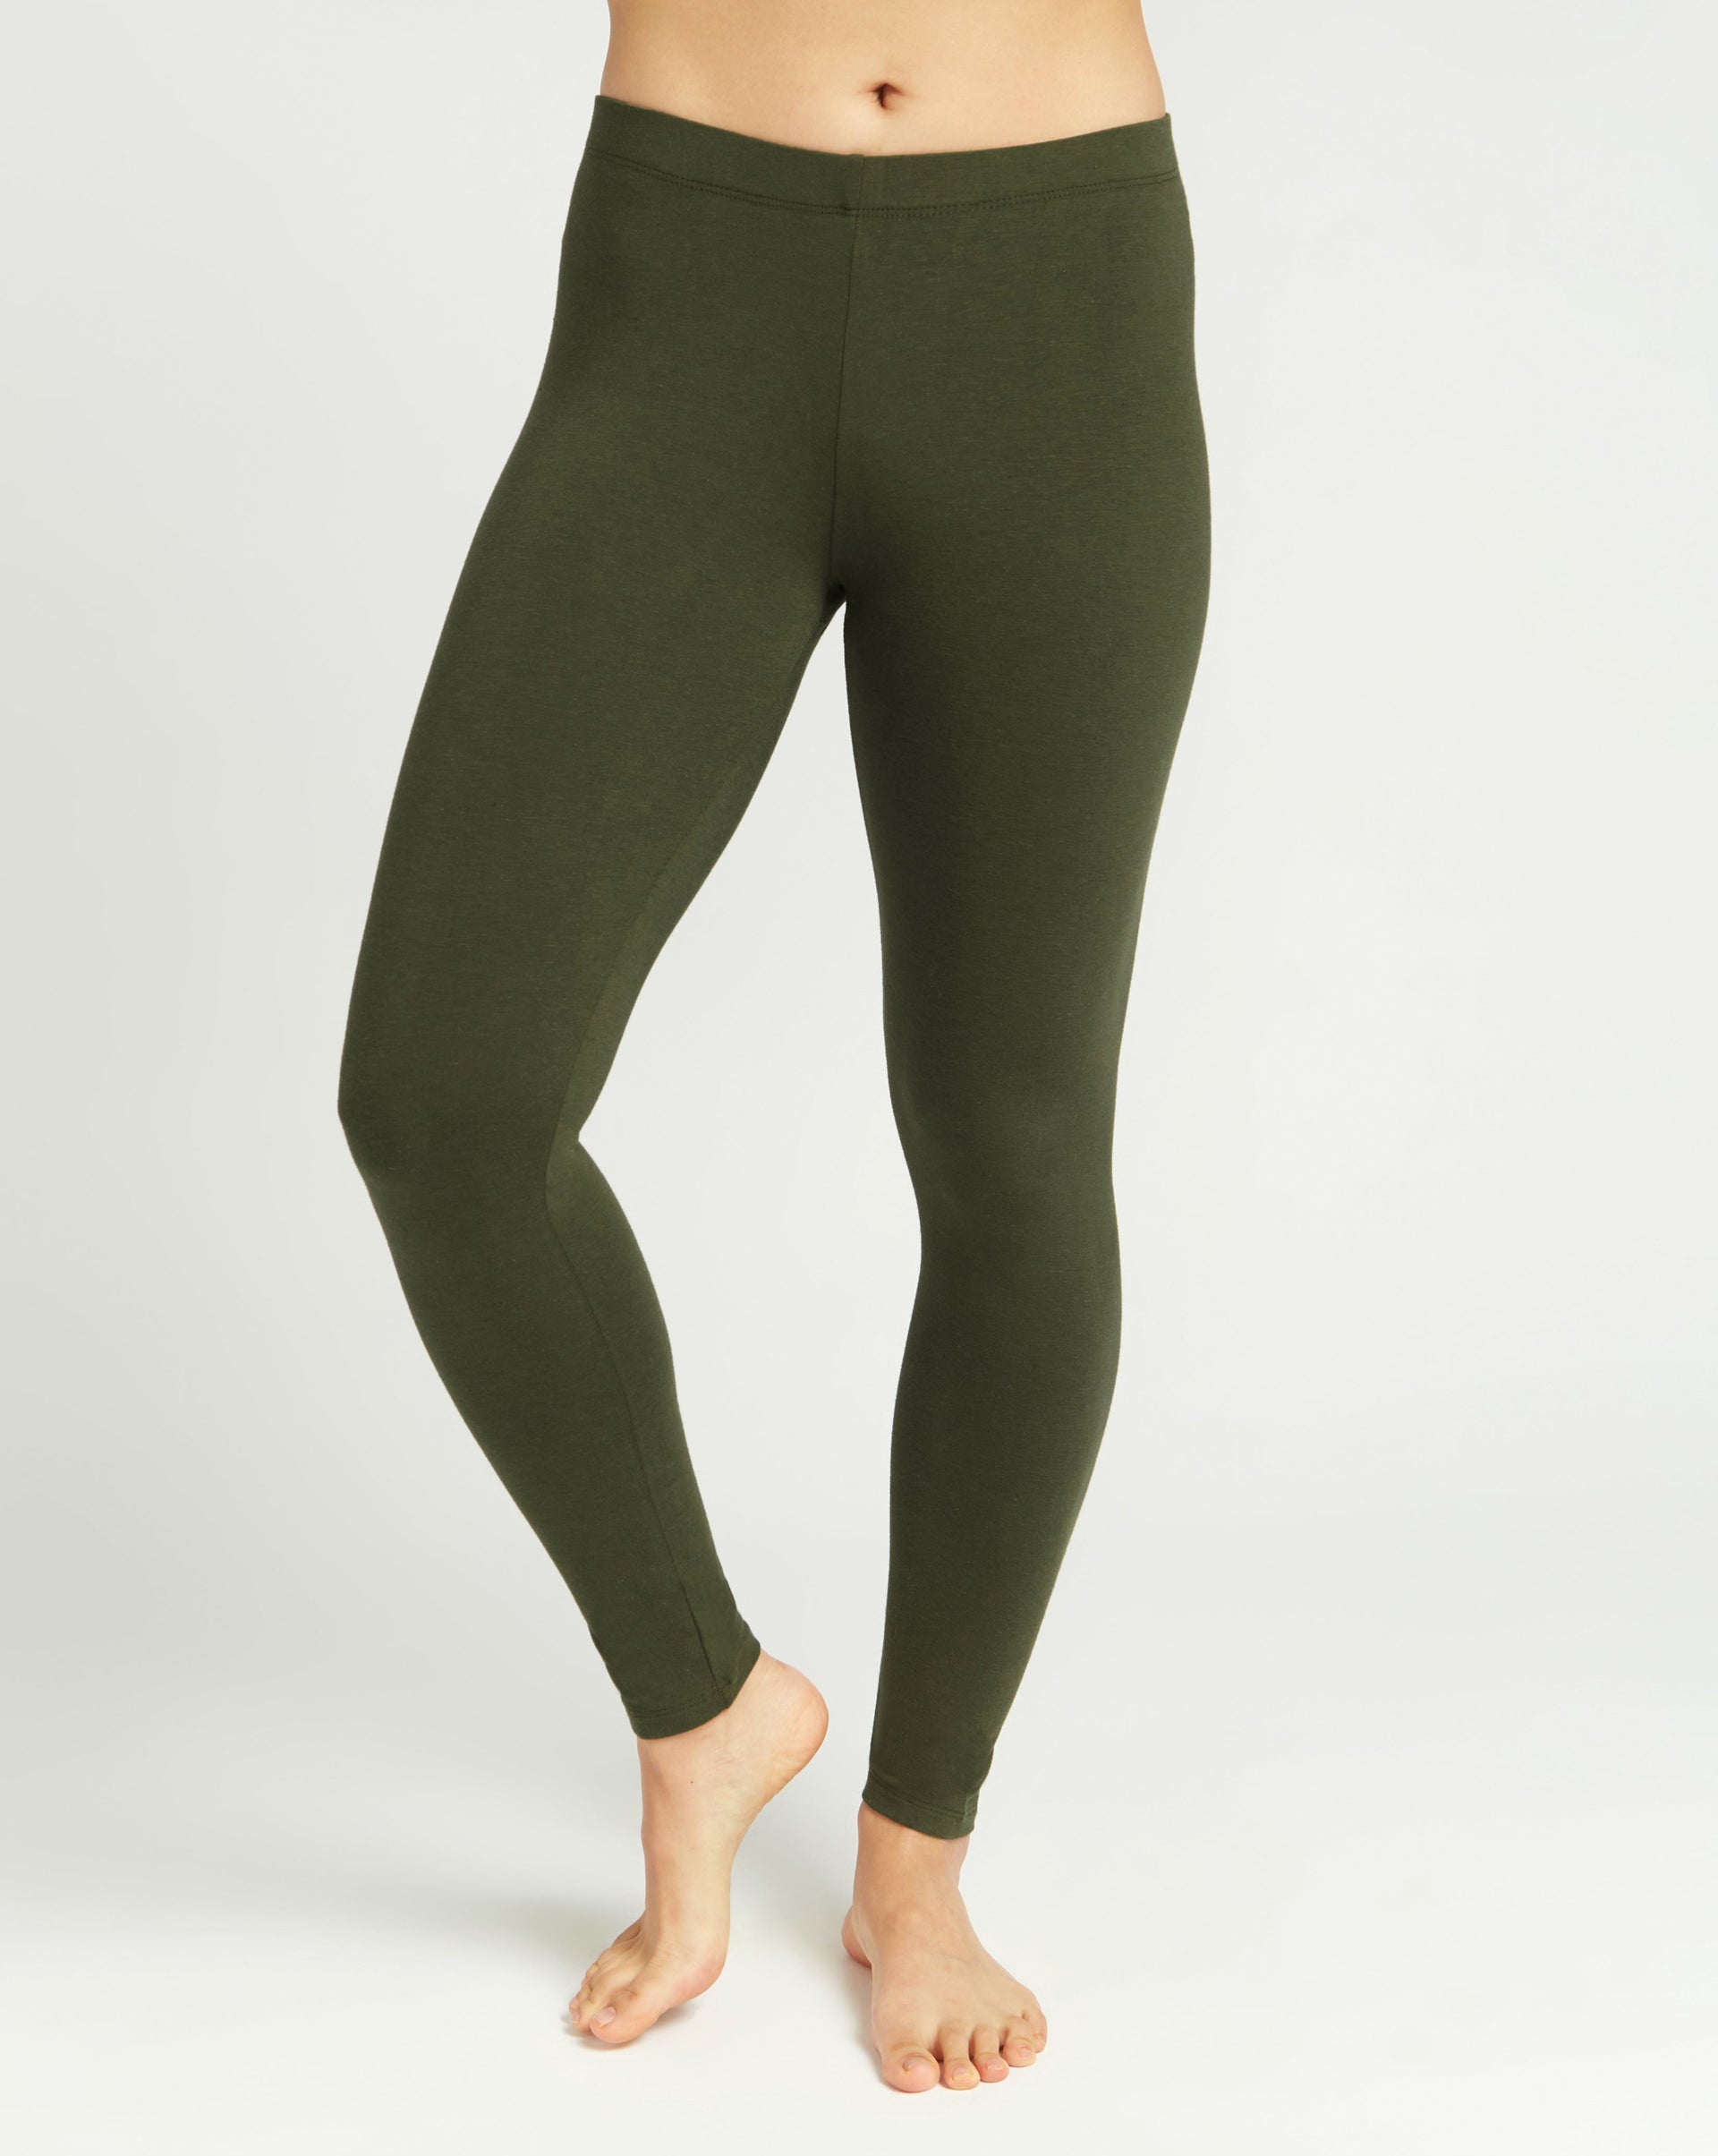 Best Deal for Zando Leggings for Women Plus Size Ultra Soft Bamboo Pants